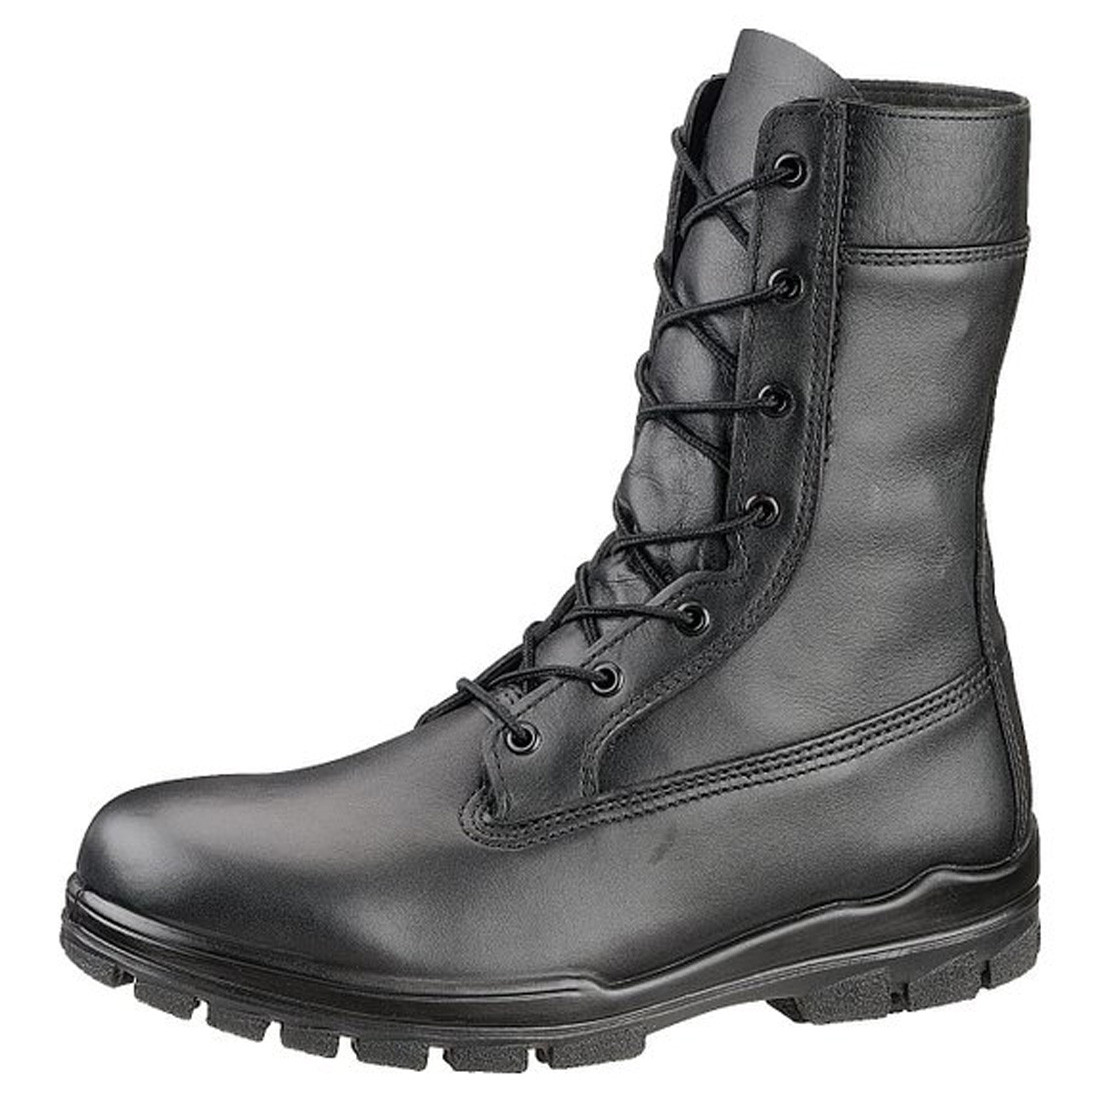 Bates Mens DuraShocks Steel Toe Military /& Tactical Boot